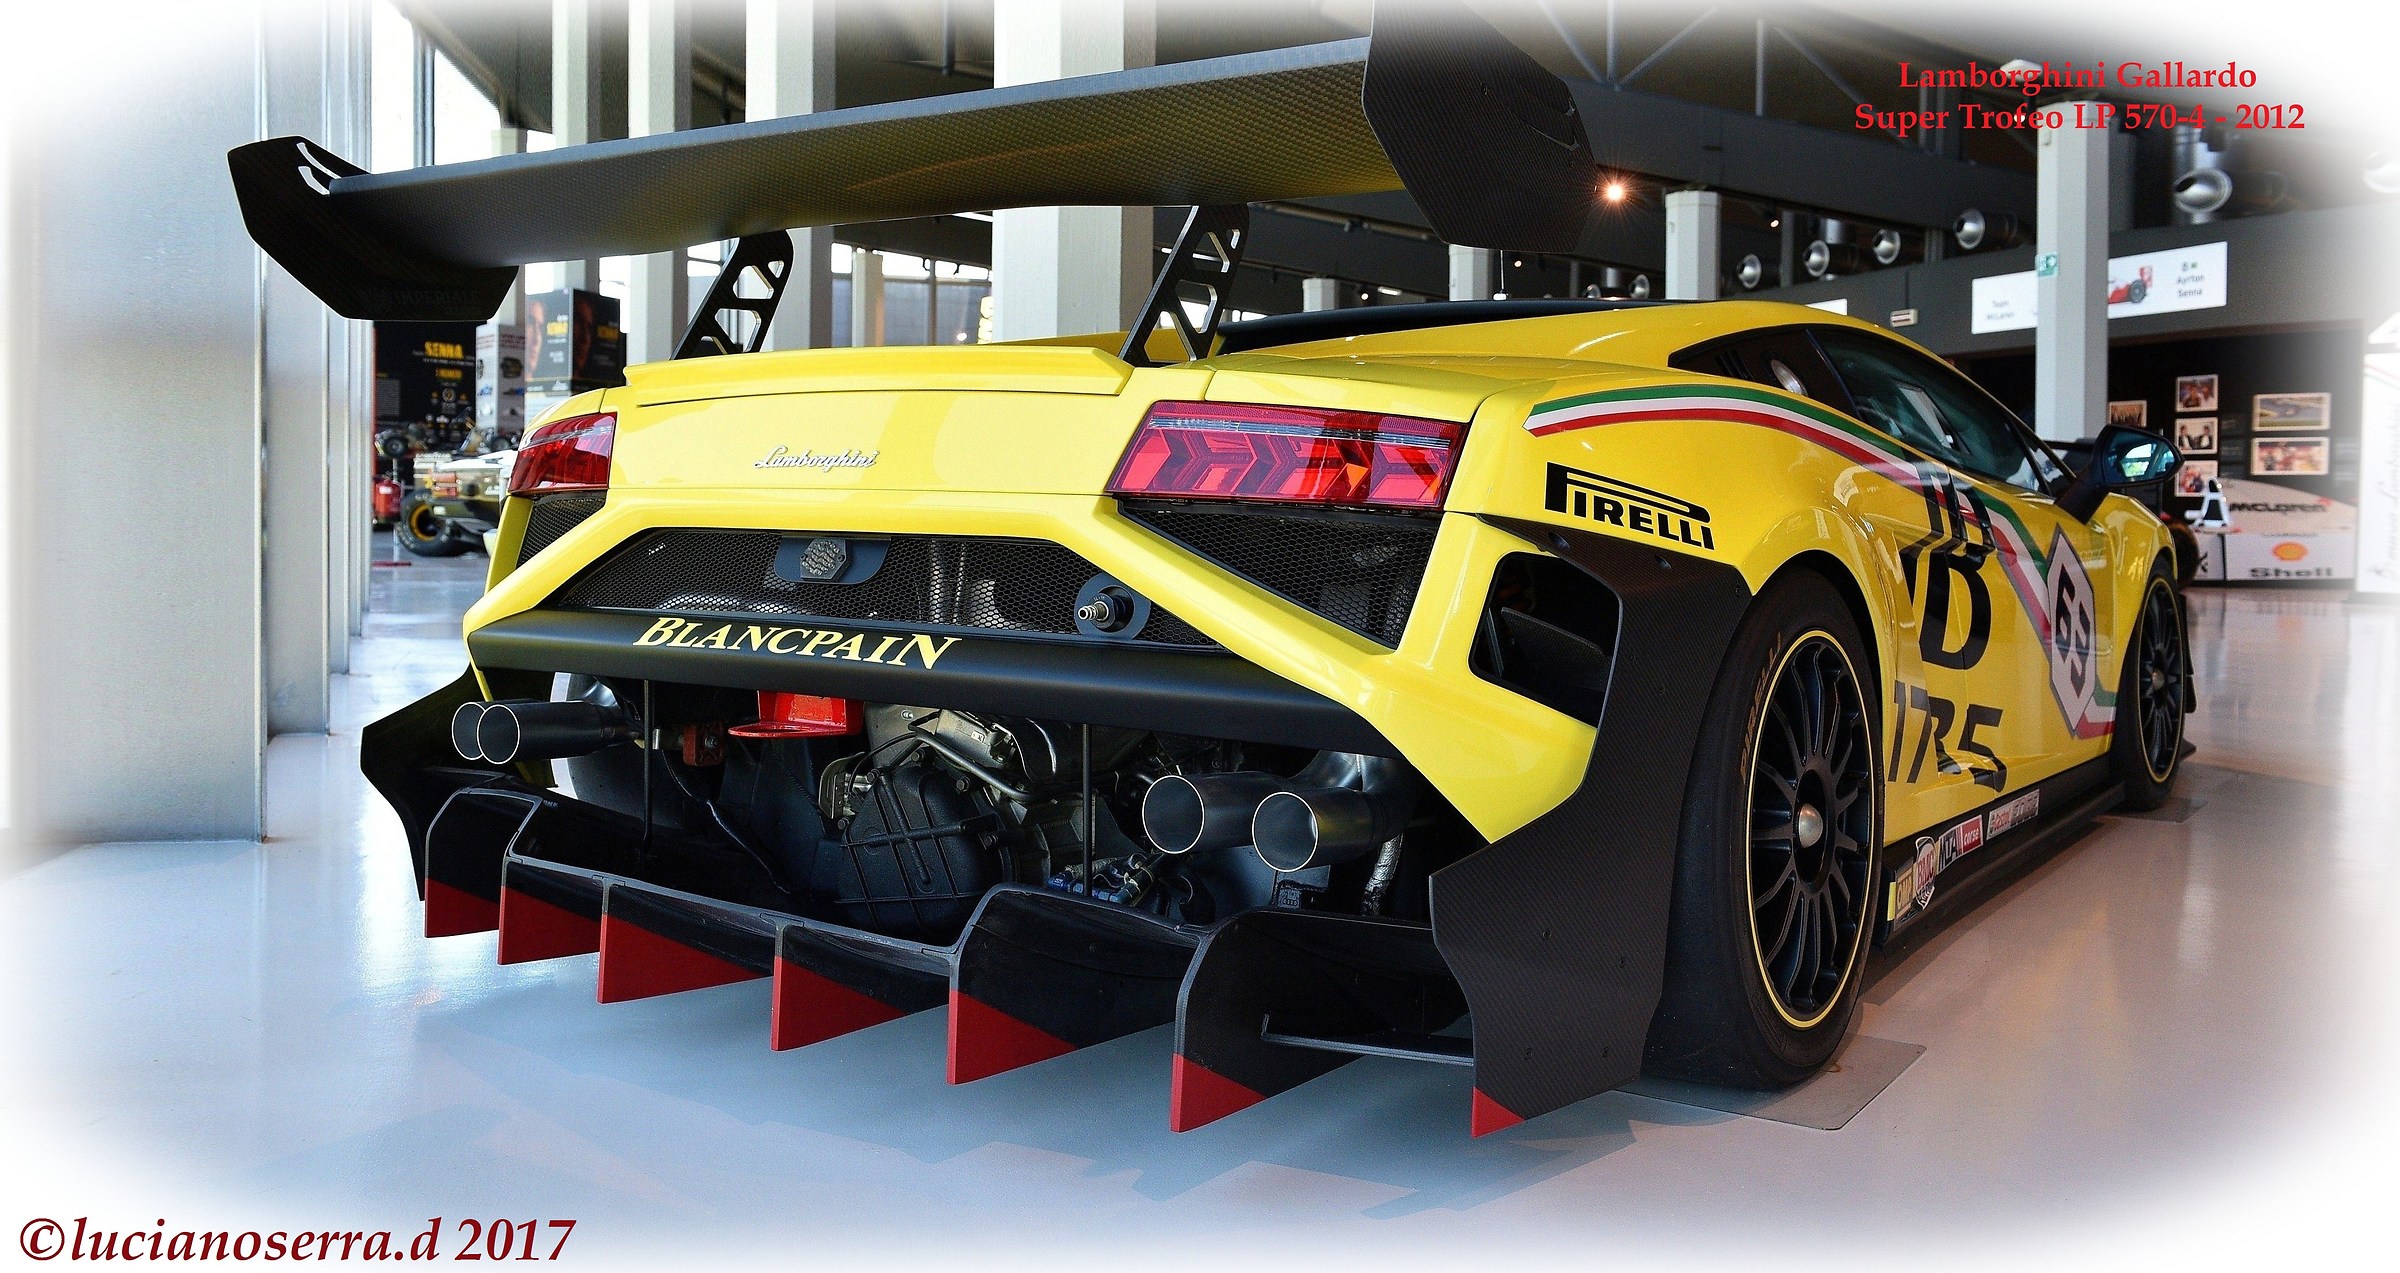 Lamborghini Gallardo Super Trophy LP 570-4 - 2012...